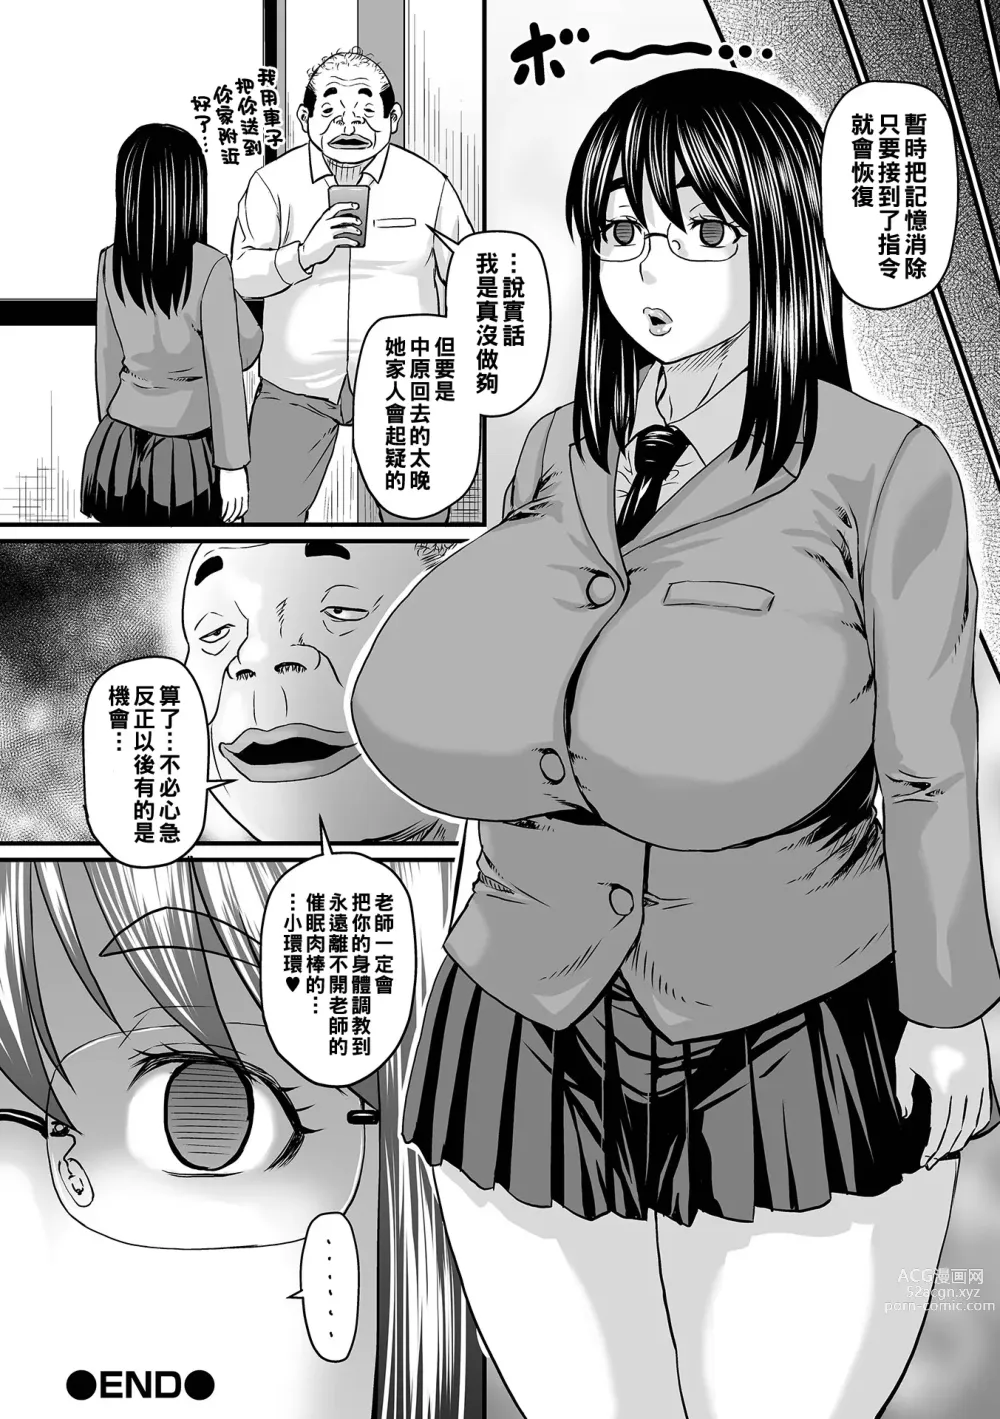 Page 19 of manga Yokubou Kanaeru Kiseki no......